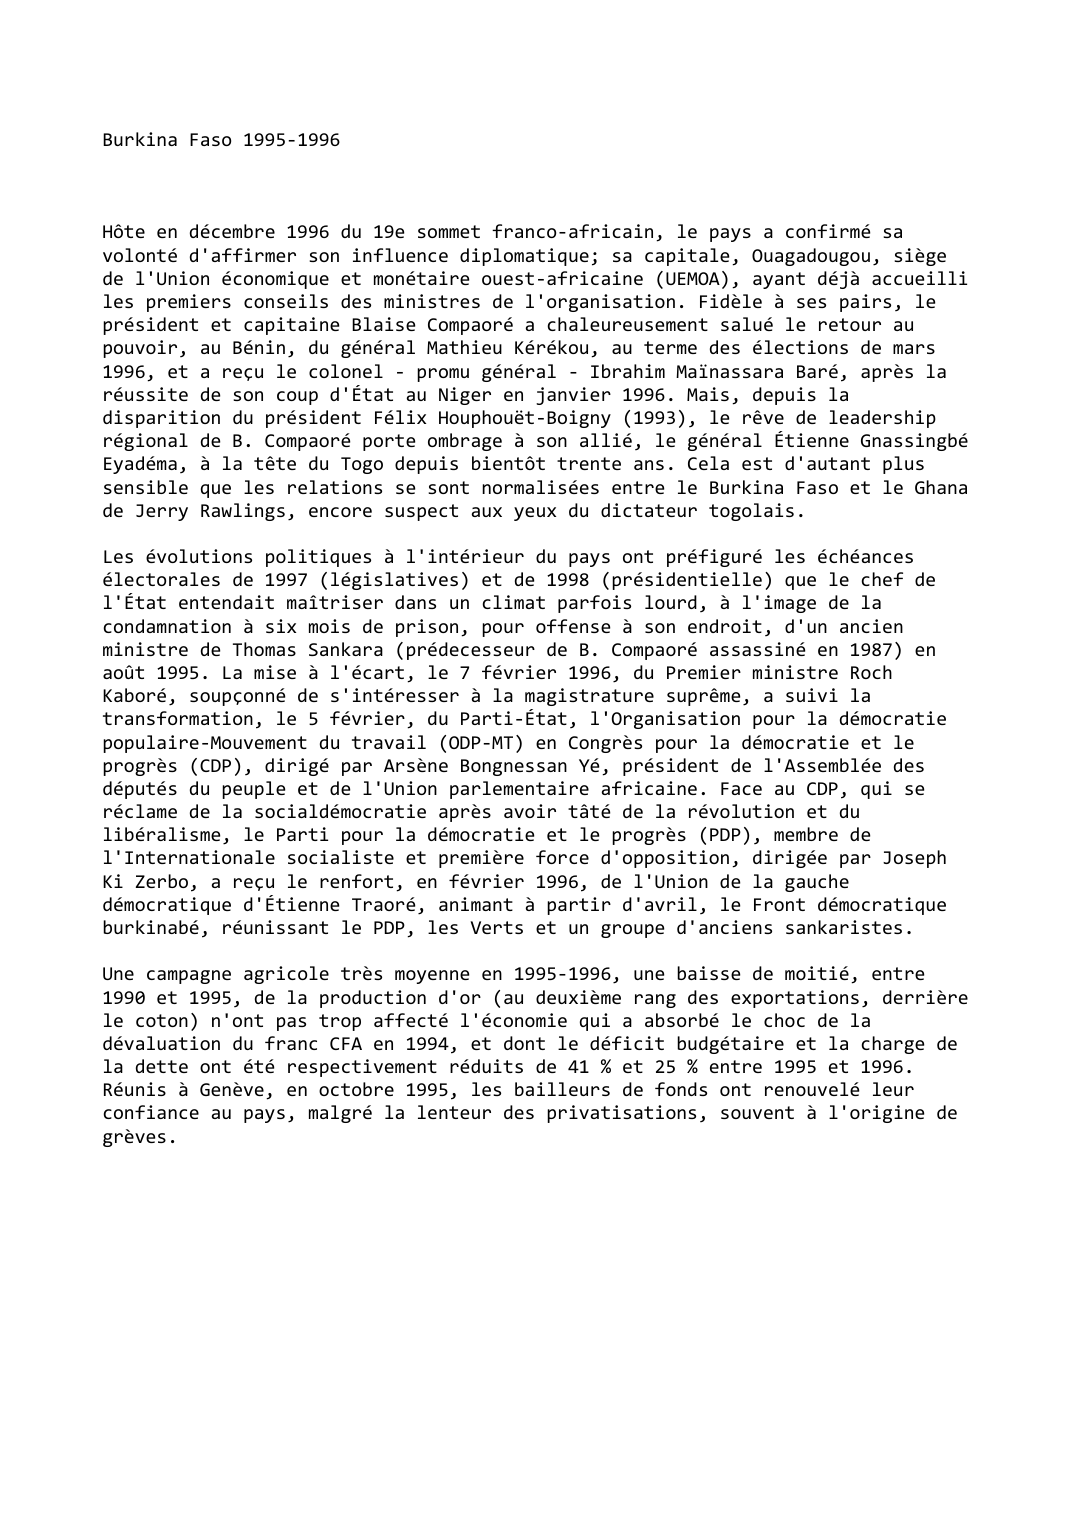 Prévisualisation du document Burkina Faso (1995-1996)